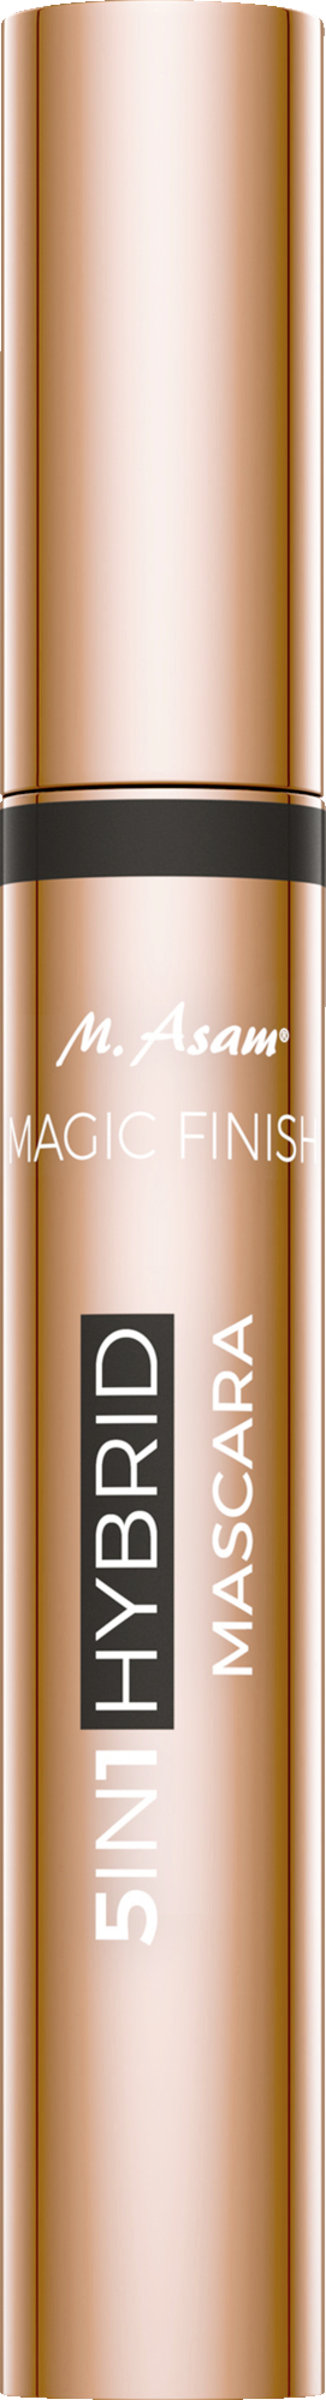 M. Asam MAGIC FINISH 5in1 Hybrid Mascara - Deep Black